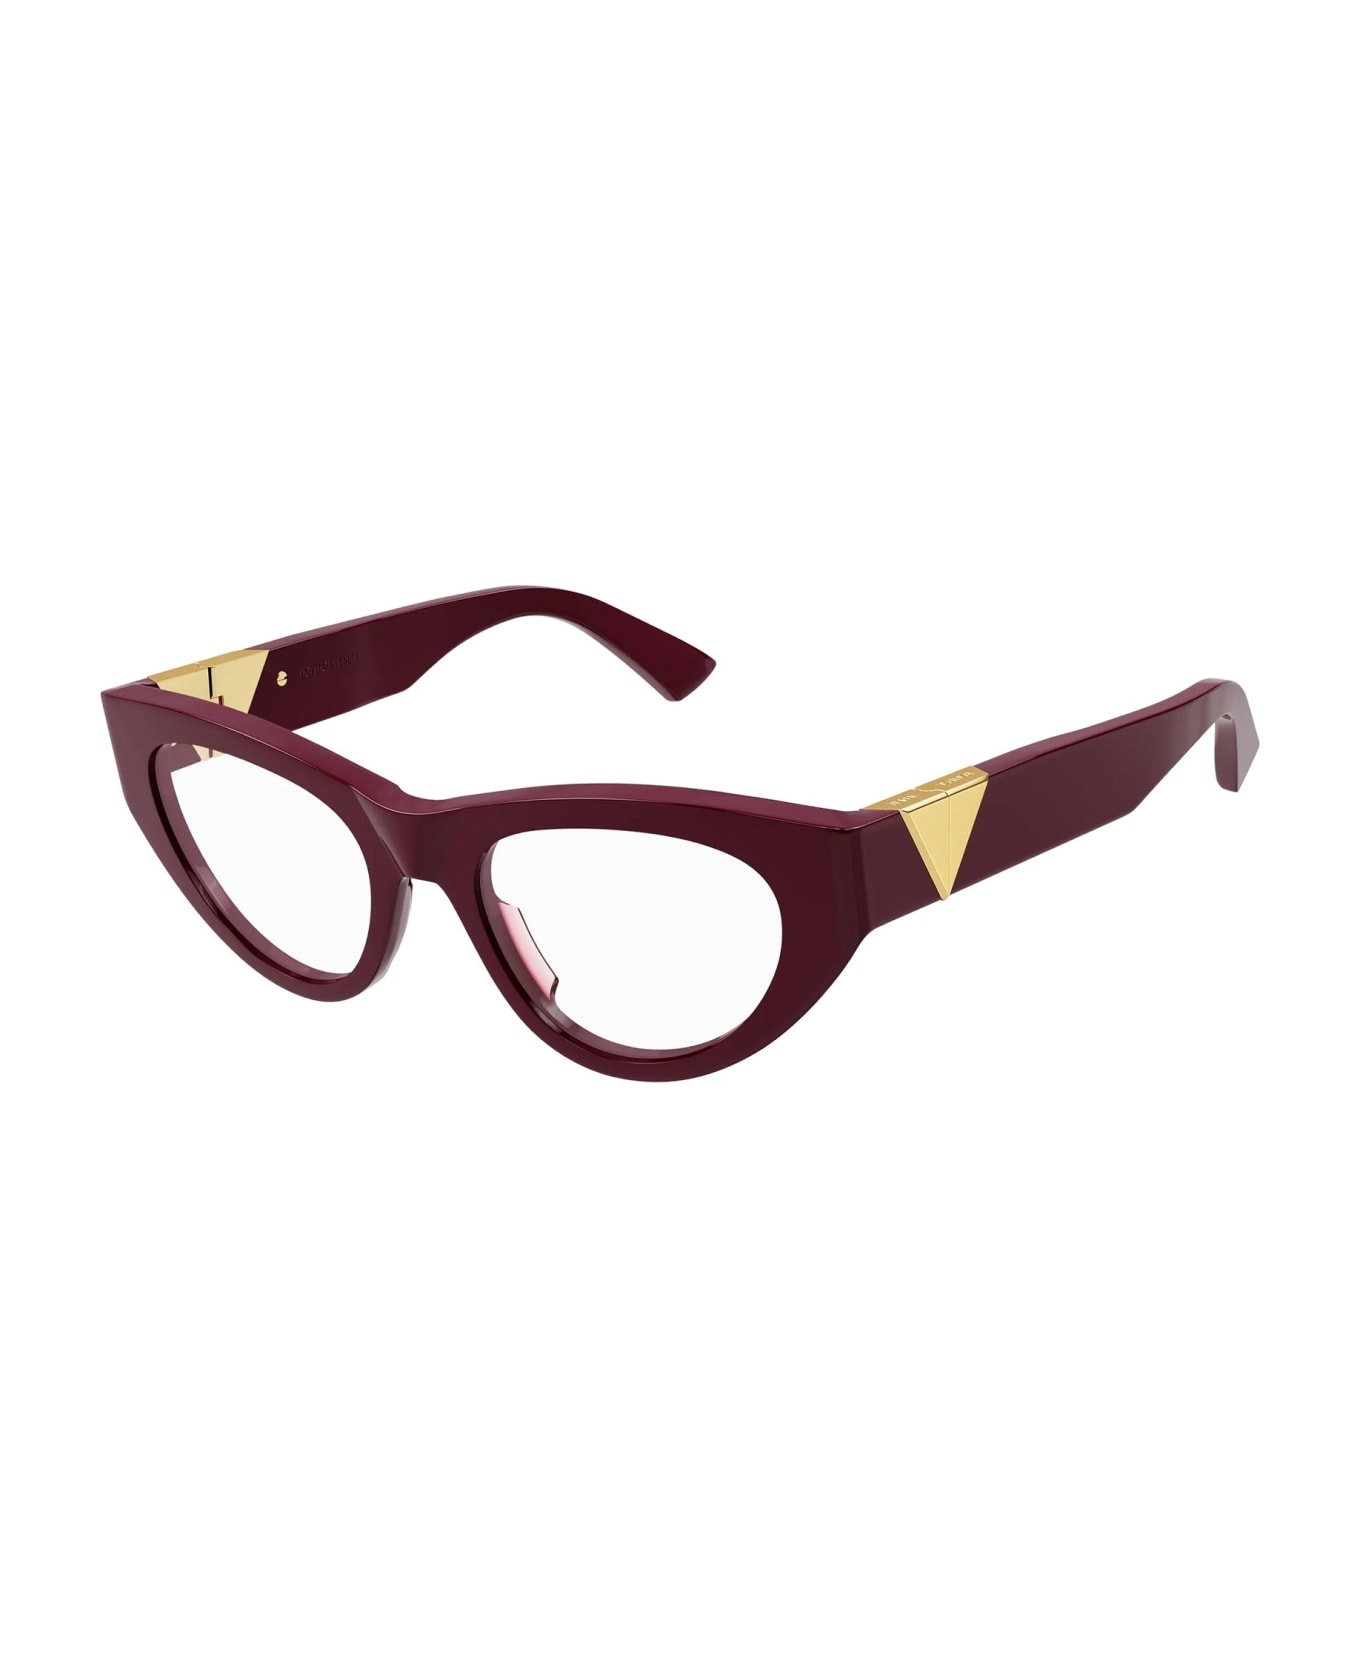 Bottega Veneta Eyewear Bv1179o-003 - Burgundy Glasses - burgundy